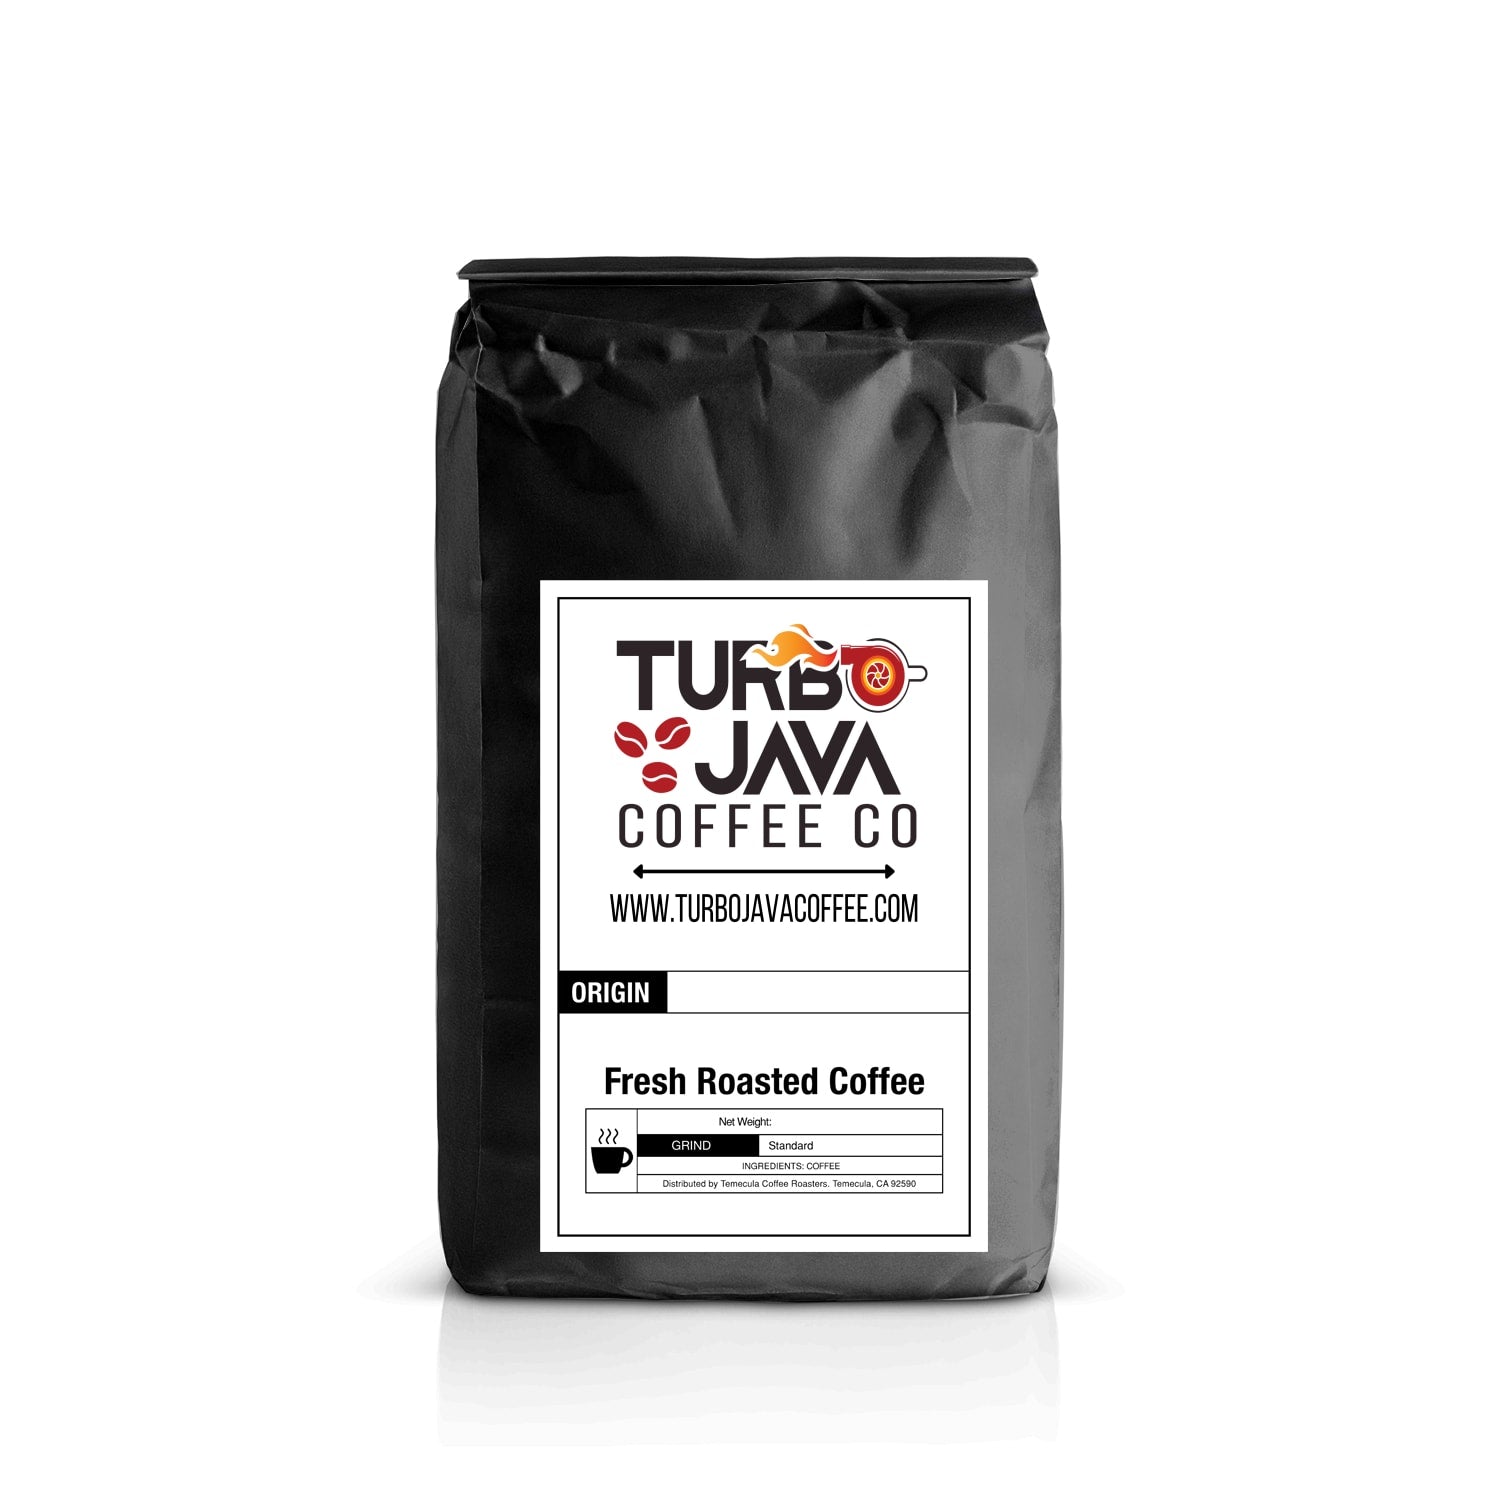 Turbo Java Coffee Co. Cinnabun Coffee 12 oz / Standard,12 oz / Coarse,12 oz / Espresso,12 oz / Whole Bean,1 lb / Standard,1 lb / Coarse,1 lb / Espresso,1 lb / Whole Bean,2 lb / Standard,2 lb / Coarse,2 lb / Espresso,2 lb / Whole Bean,5 lb / Standard,5 lb / Coarse,5 lb / Espresso,5 lb / Whole Bean,12 lb / Standard,12 lb / Coarse,12 lb / Espresso,12 lb / Whole Bean